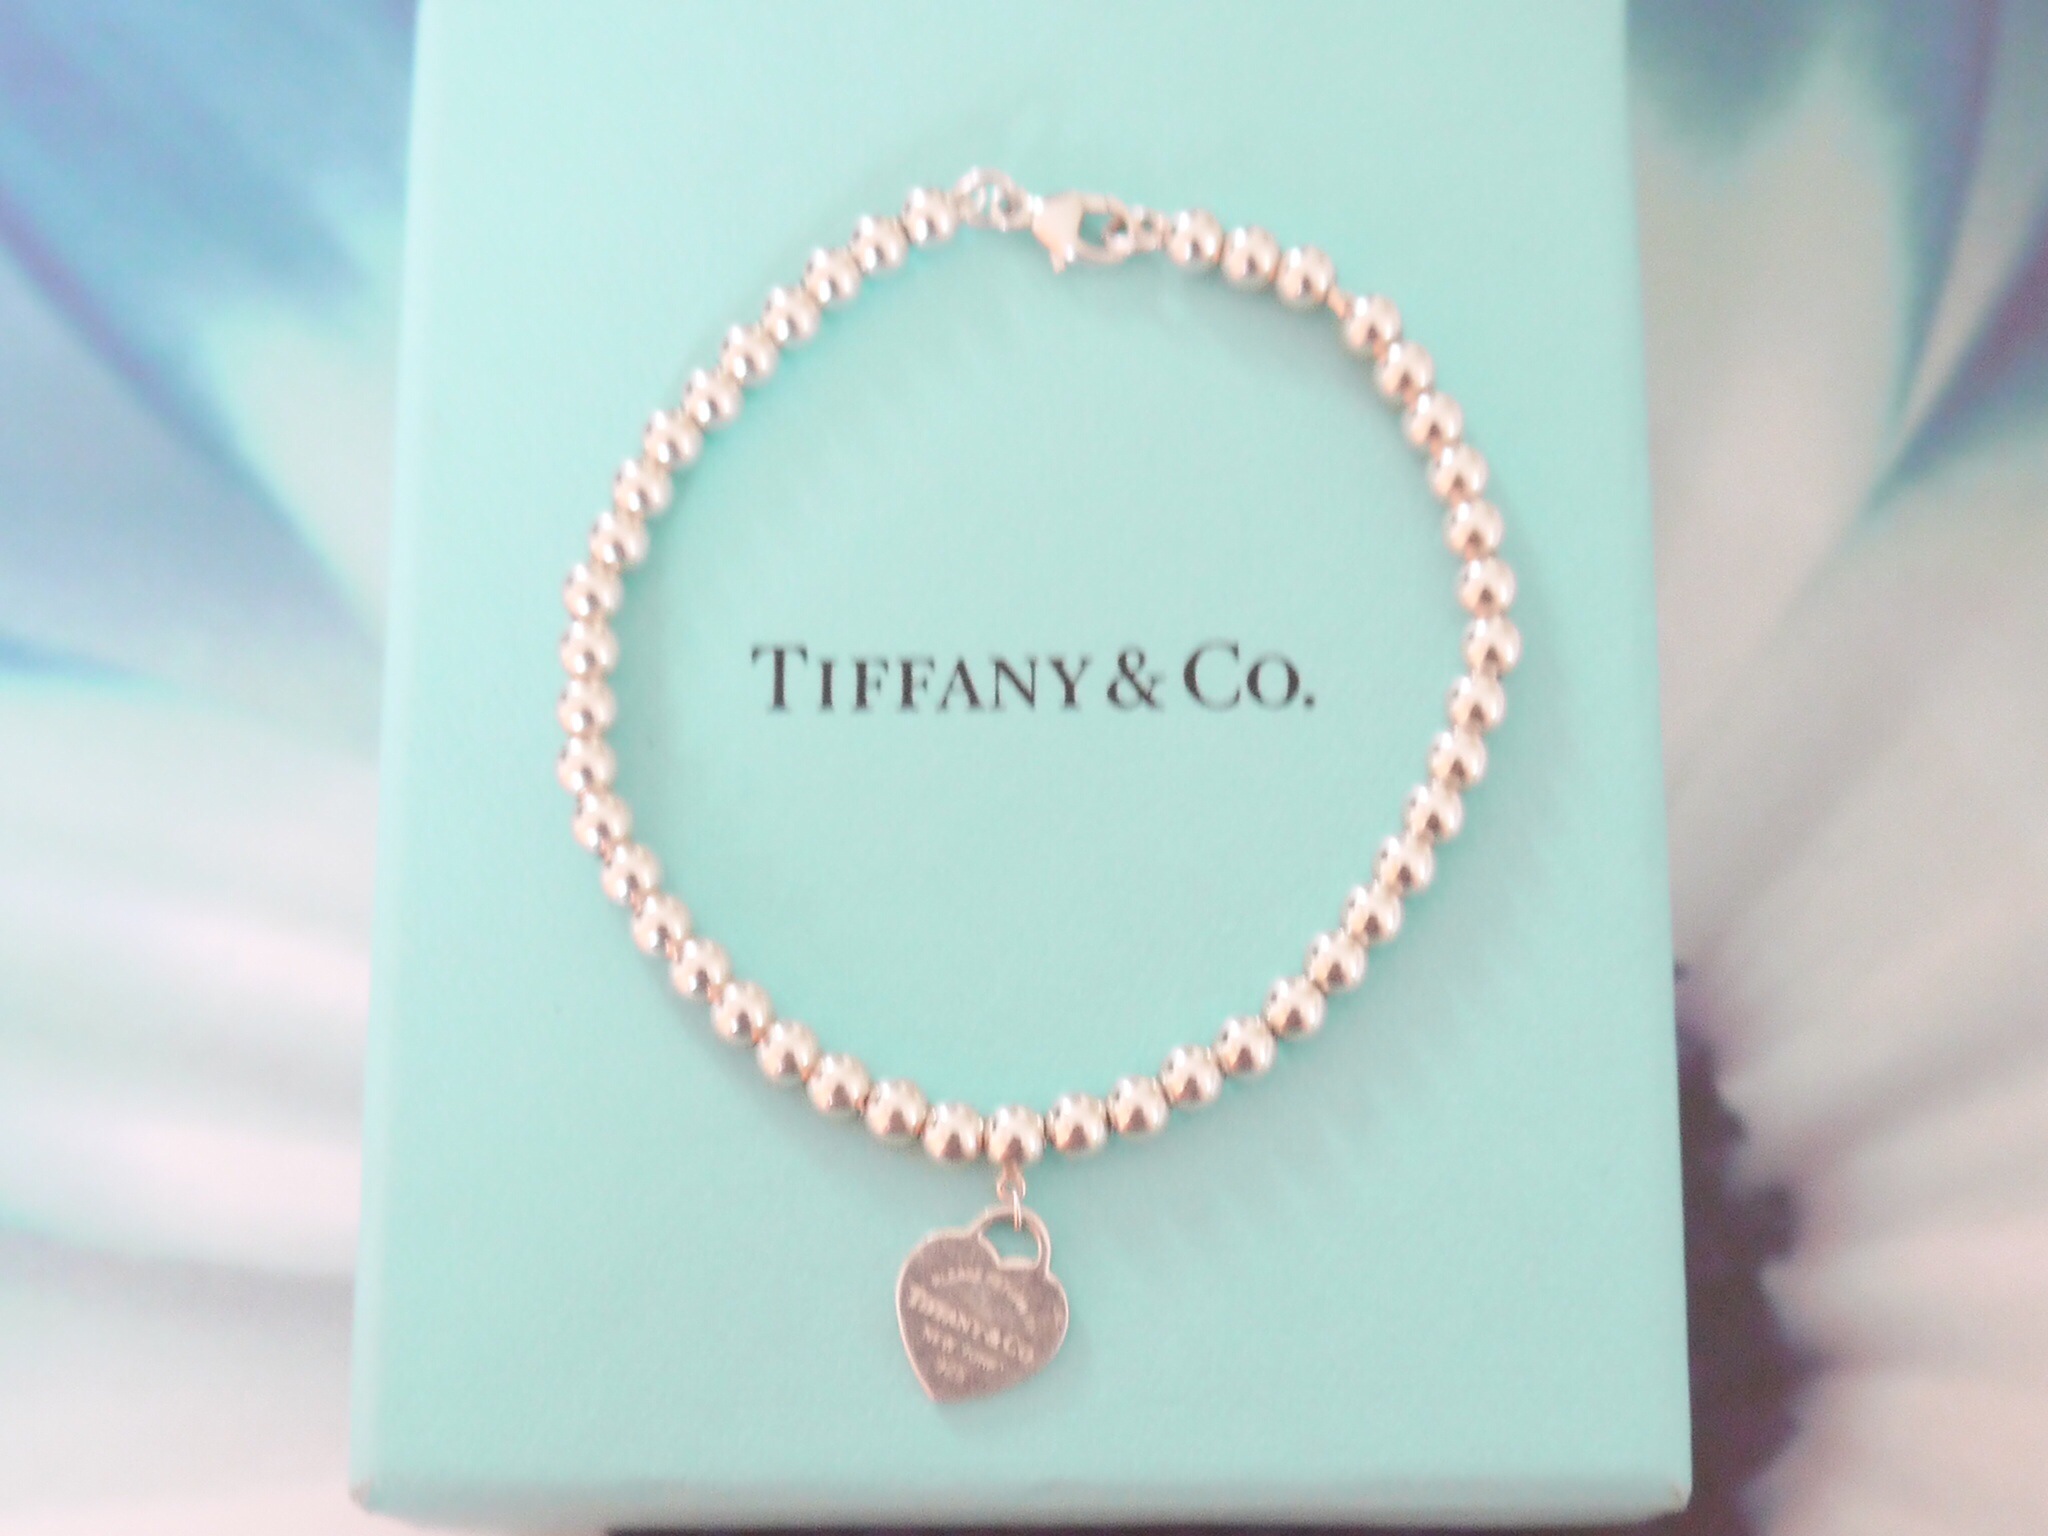 tiffany blue bead bracelet